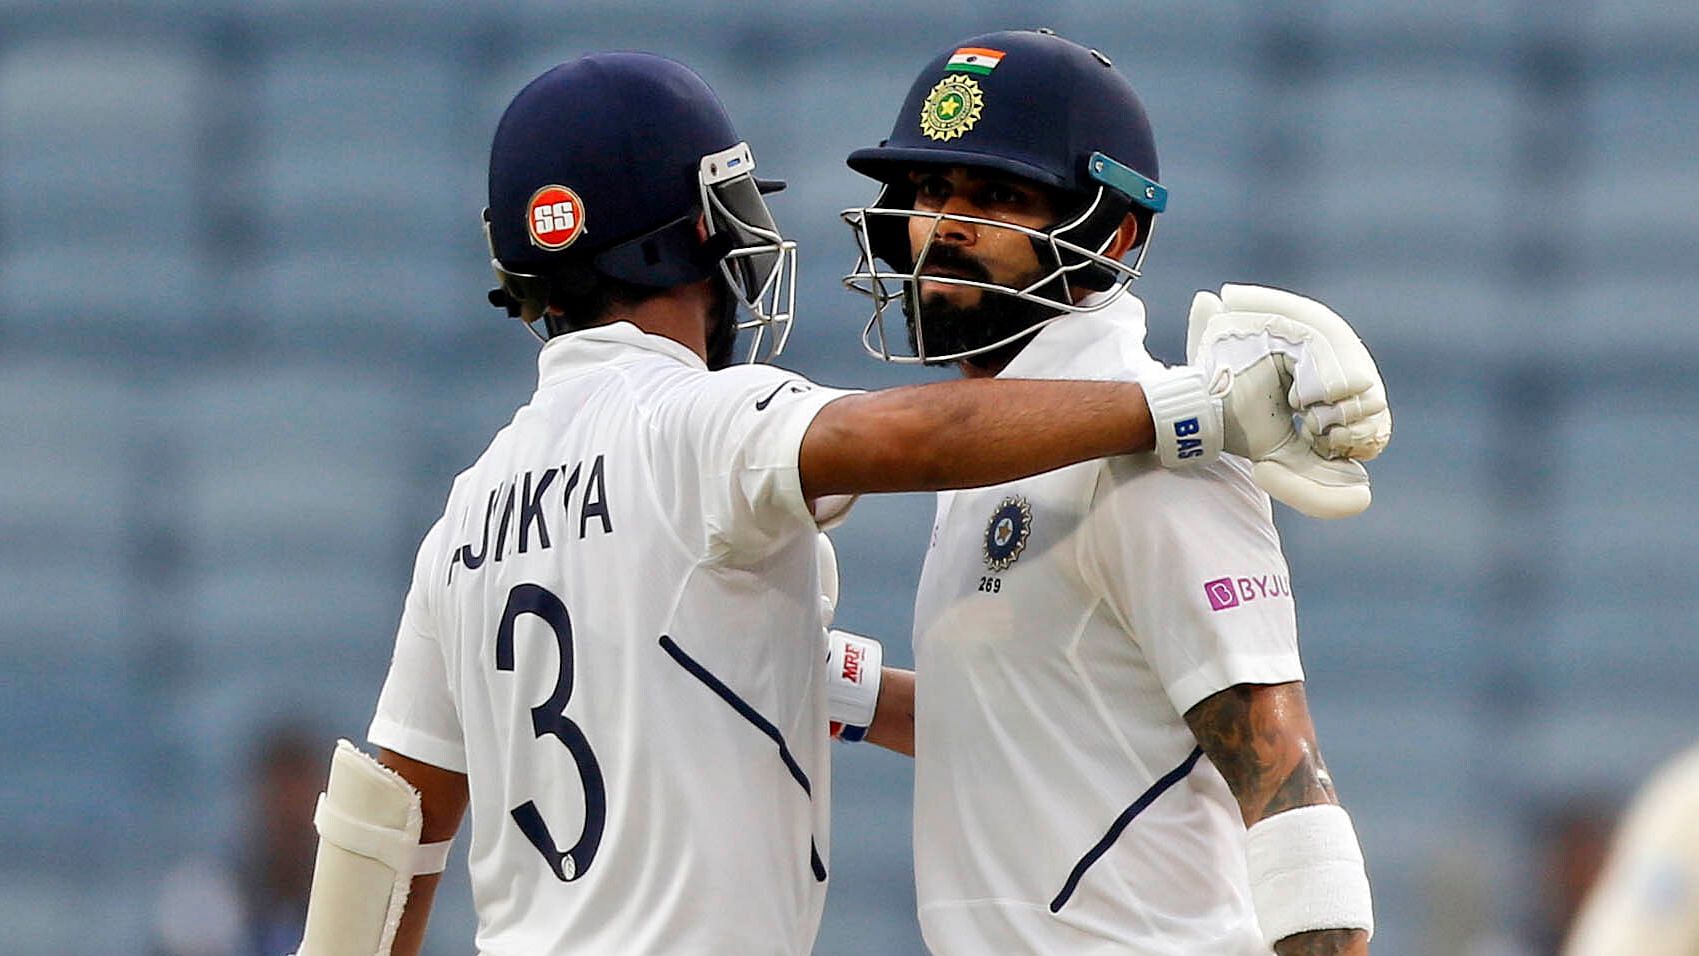 India vice-captain Ajinkya Rahane said that his and Virat Kohli’s communication while batting together helps a lot.